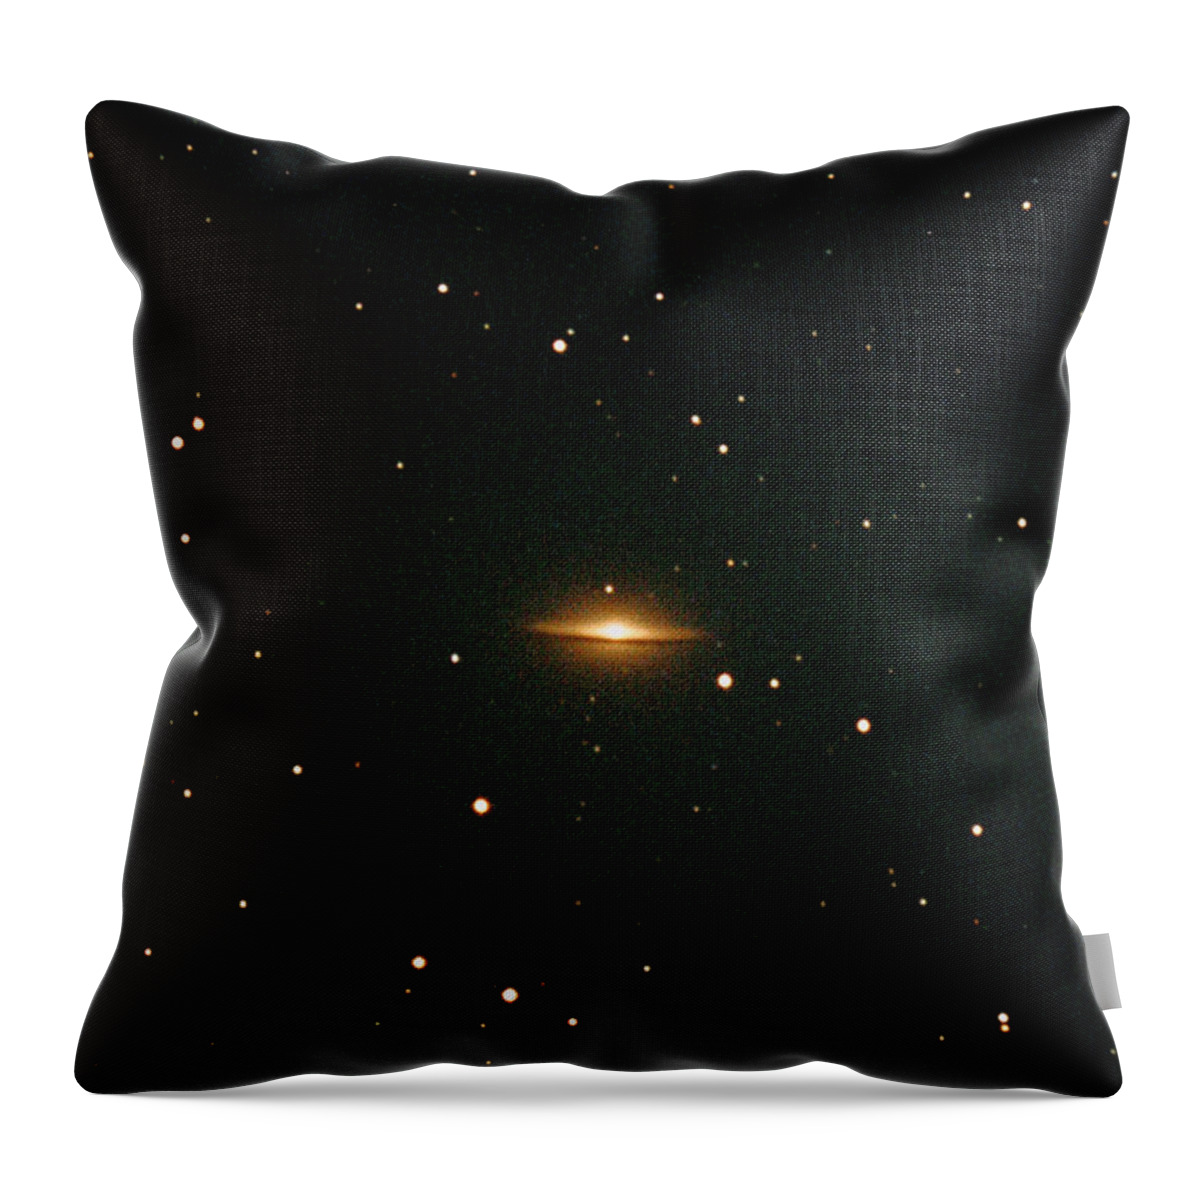 Orange Color Throw Pillow featuring the photograph Sombrero Nebula by Imagenavi